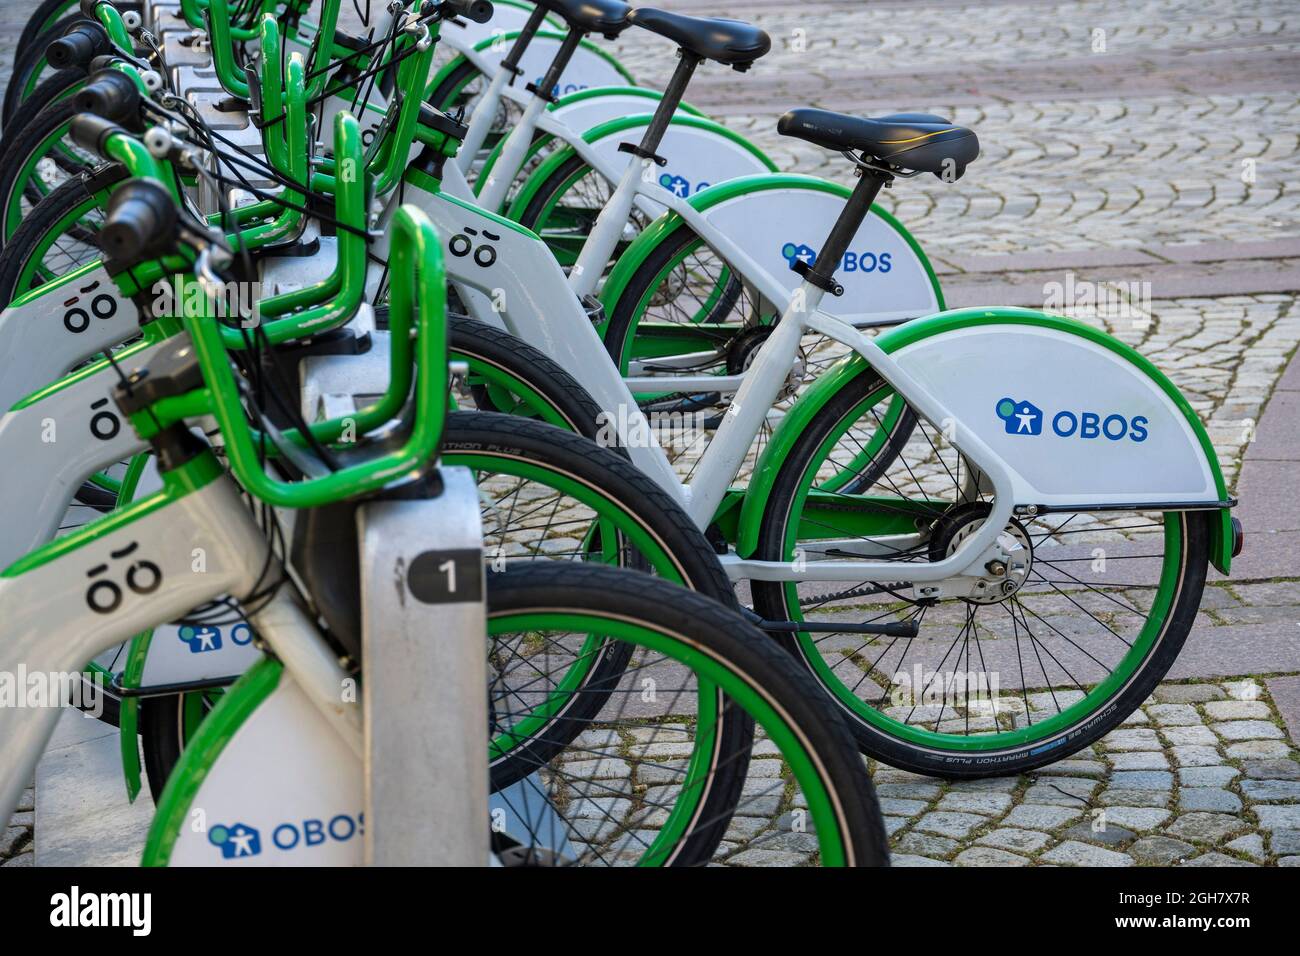 Obos rental bikes in Bergen, Norway, Europe Stock Photo